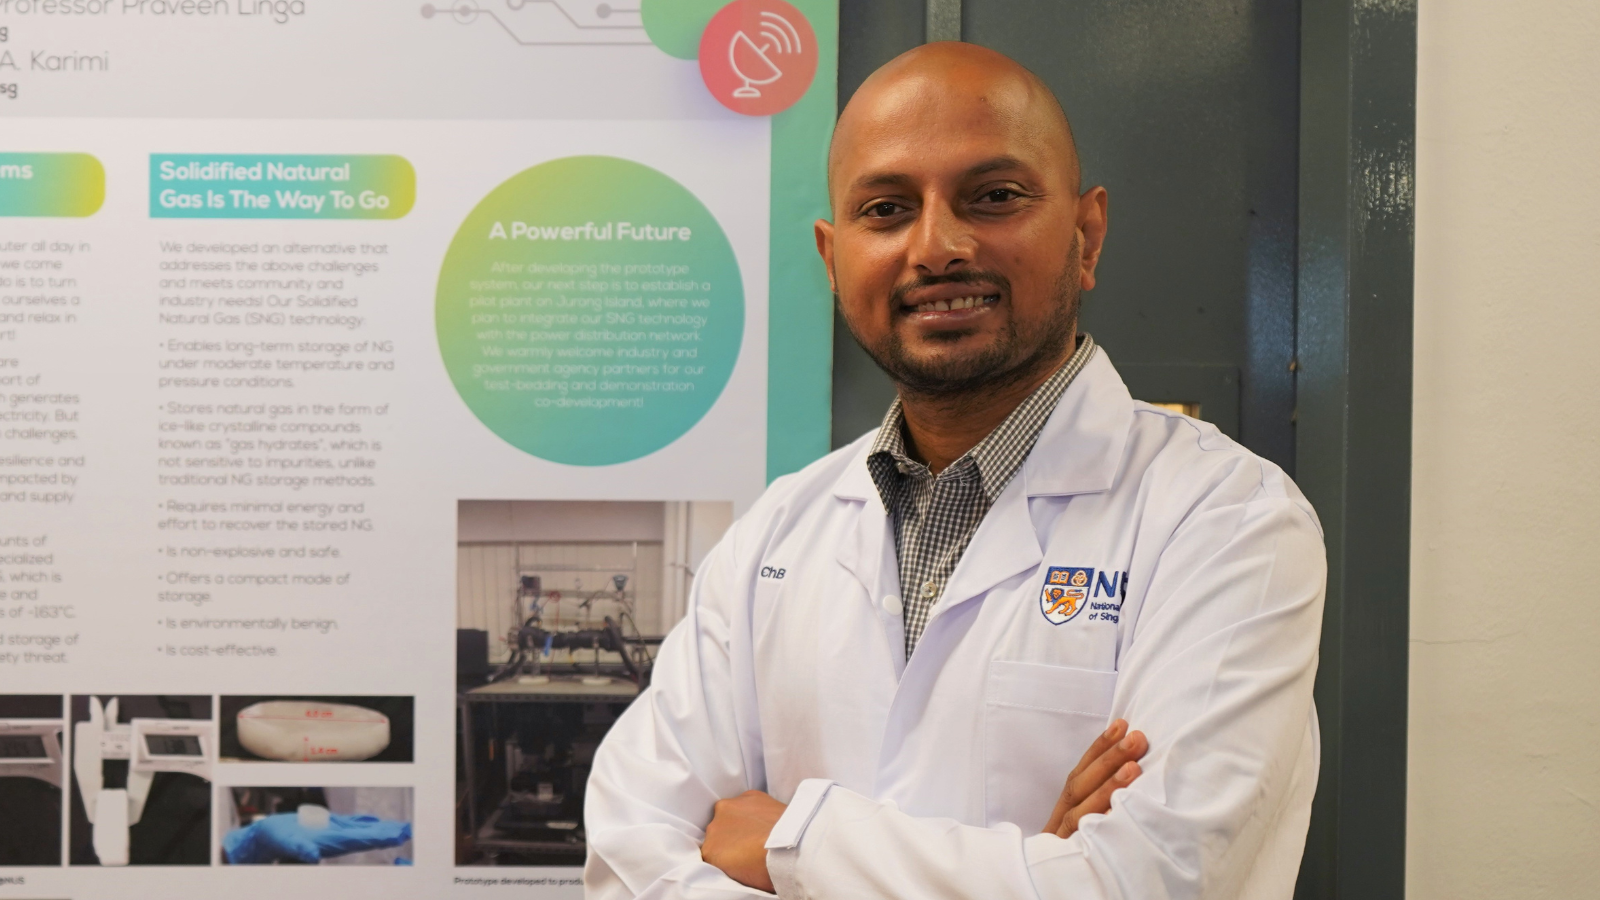 Dr Praveen Linga, Professor at Department of Chemical and Biomolecular Engineering